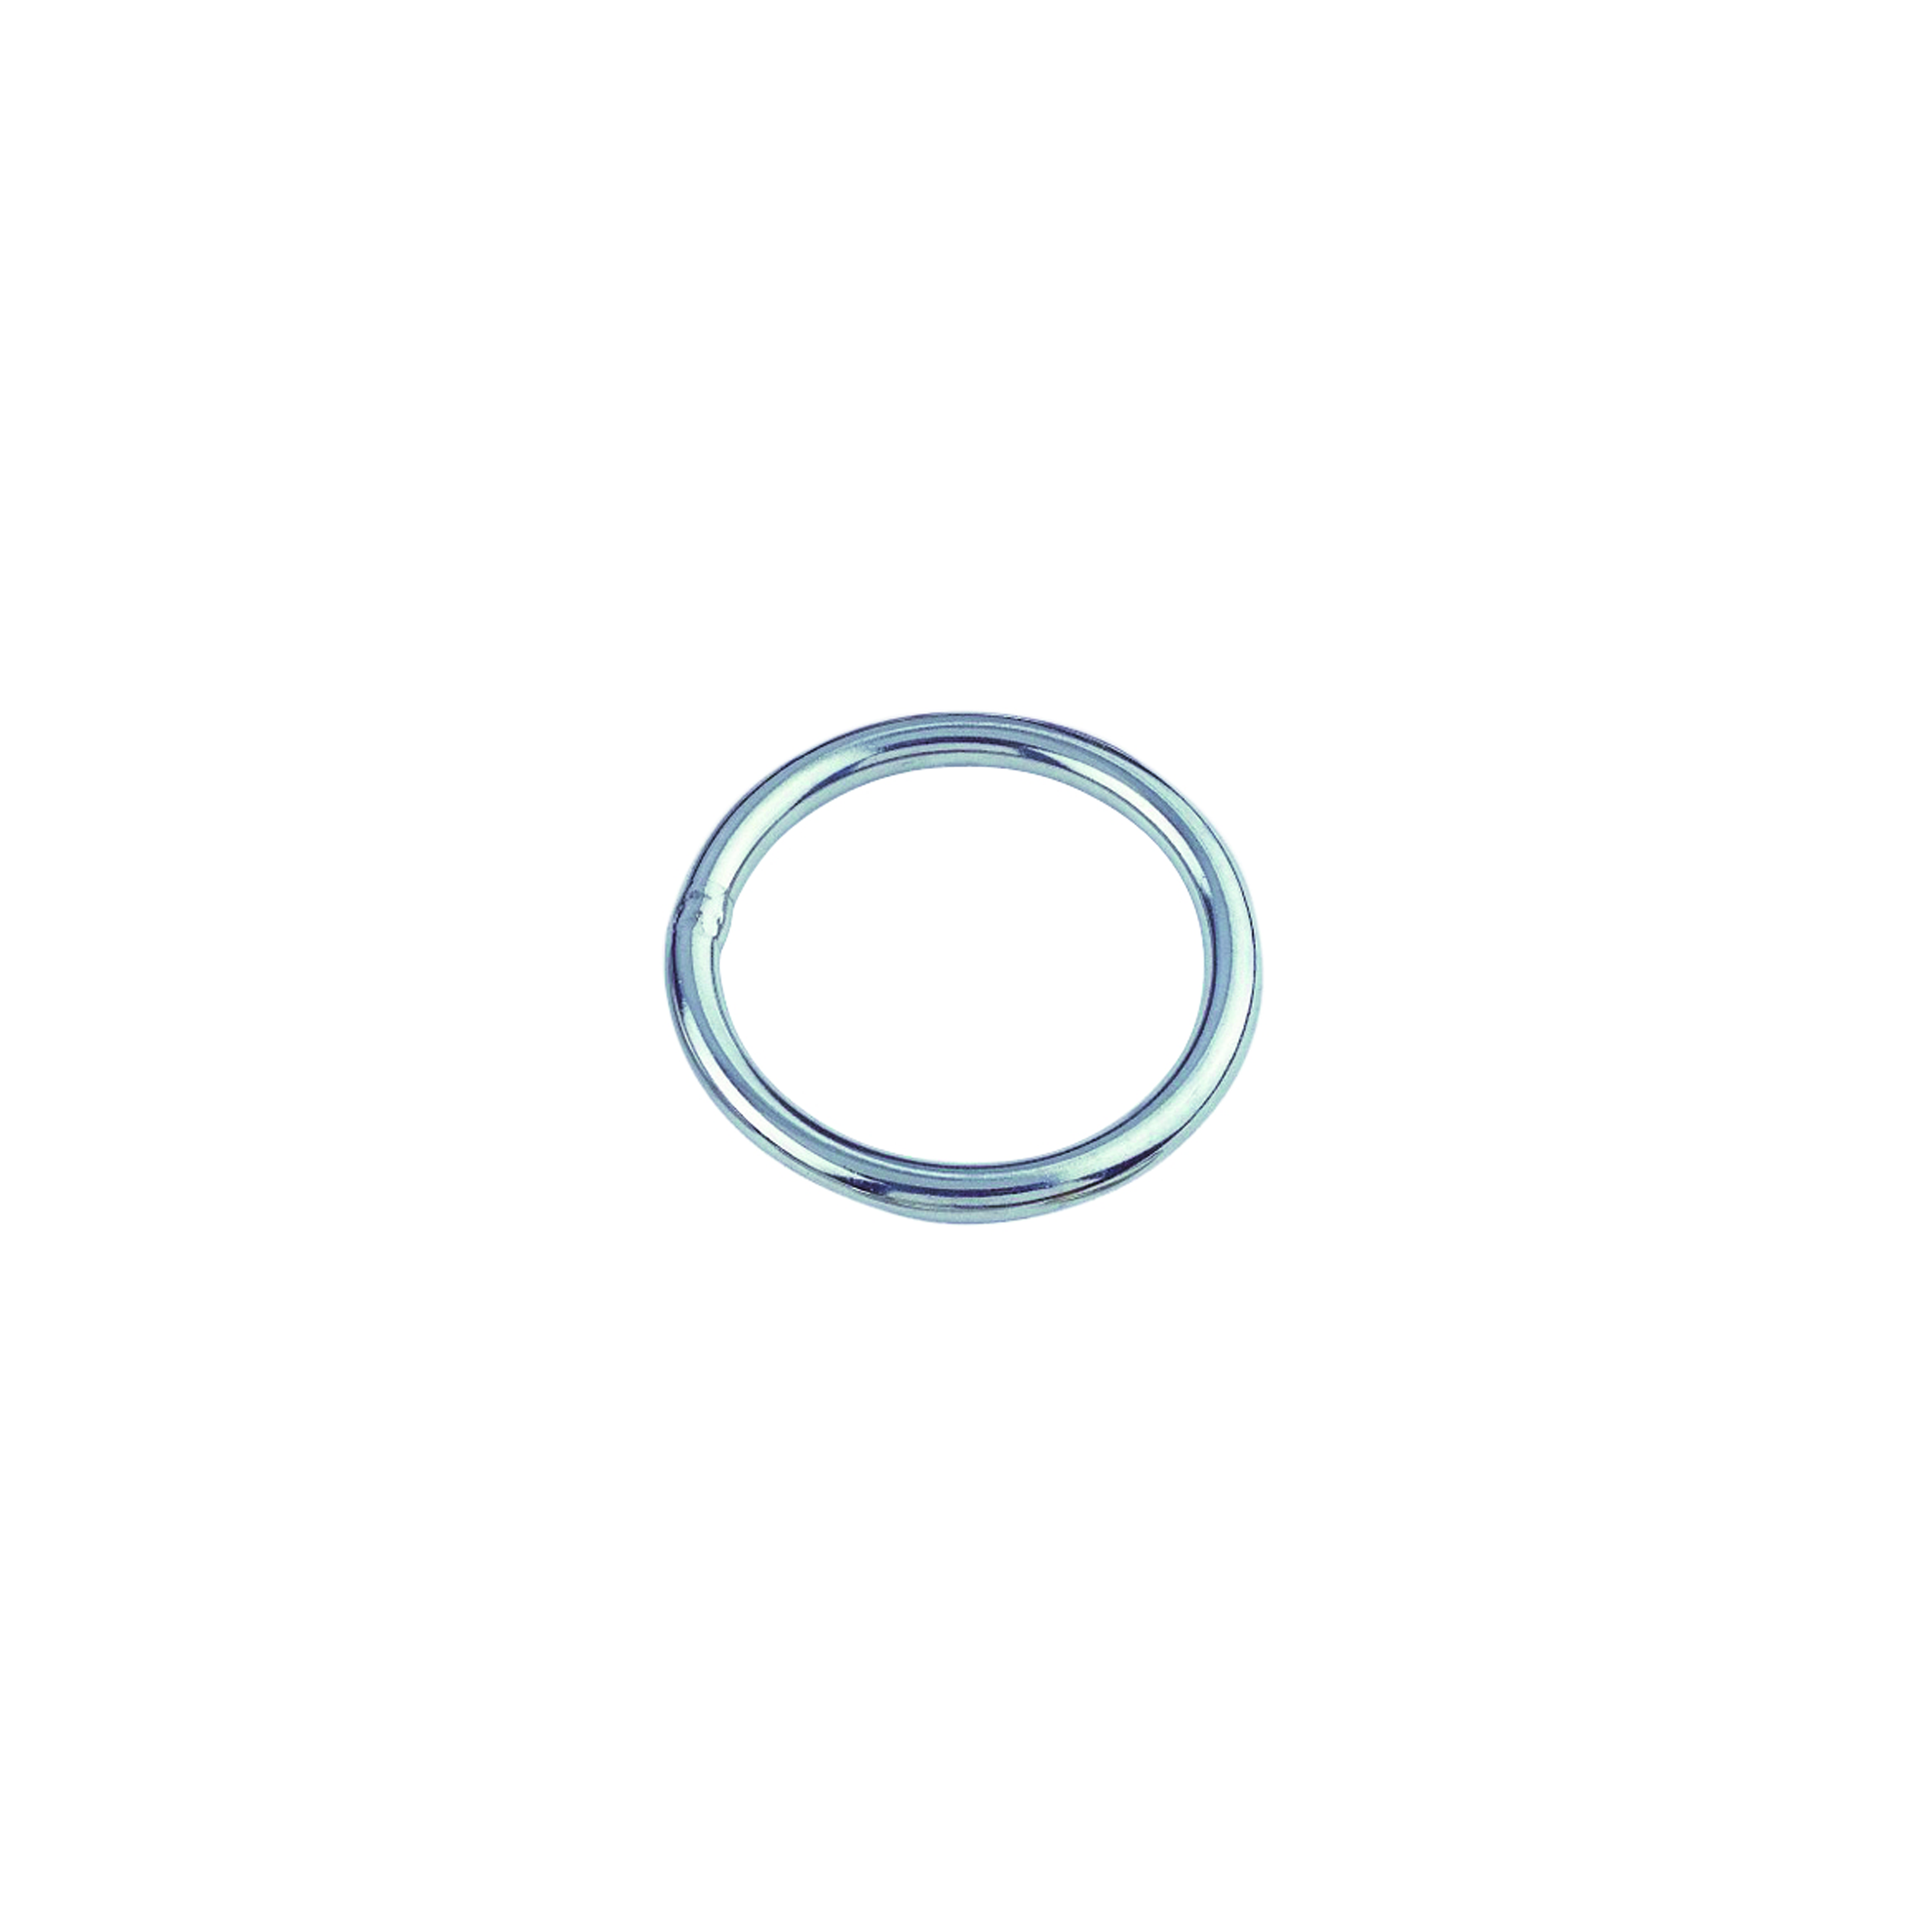 50 STCK / PCS. Ring, round A4  4x25mm